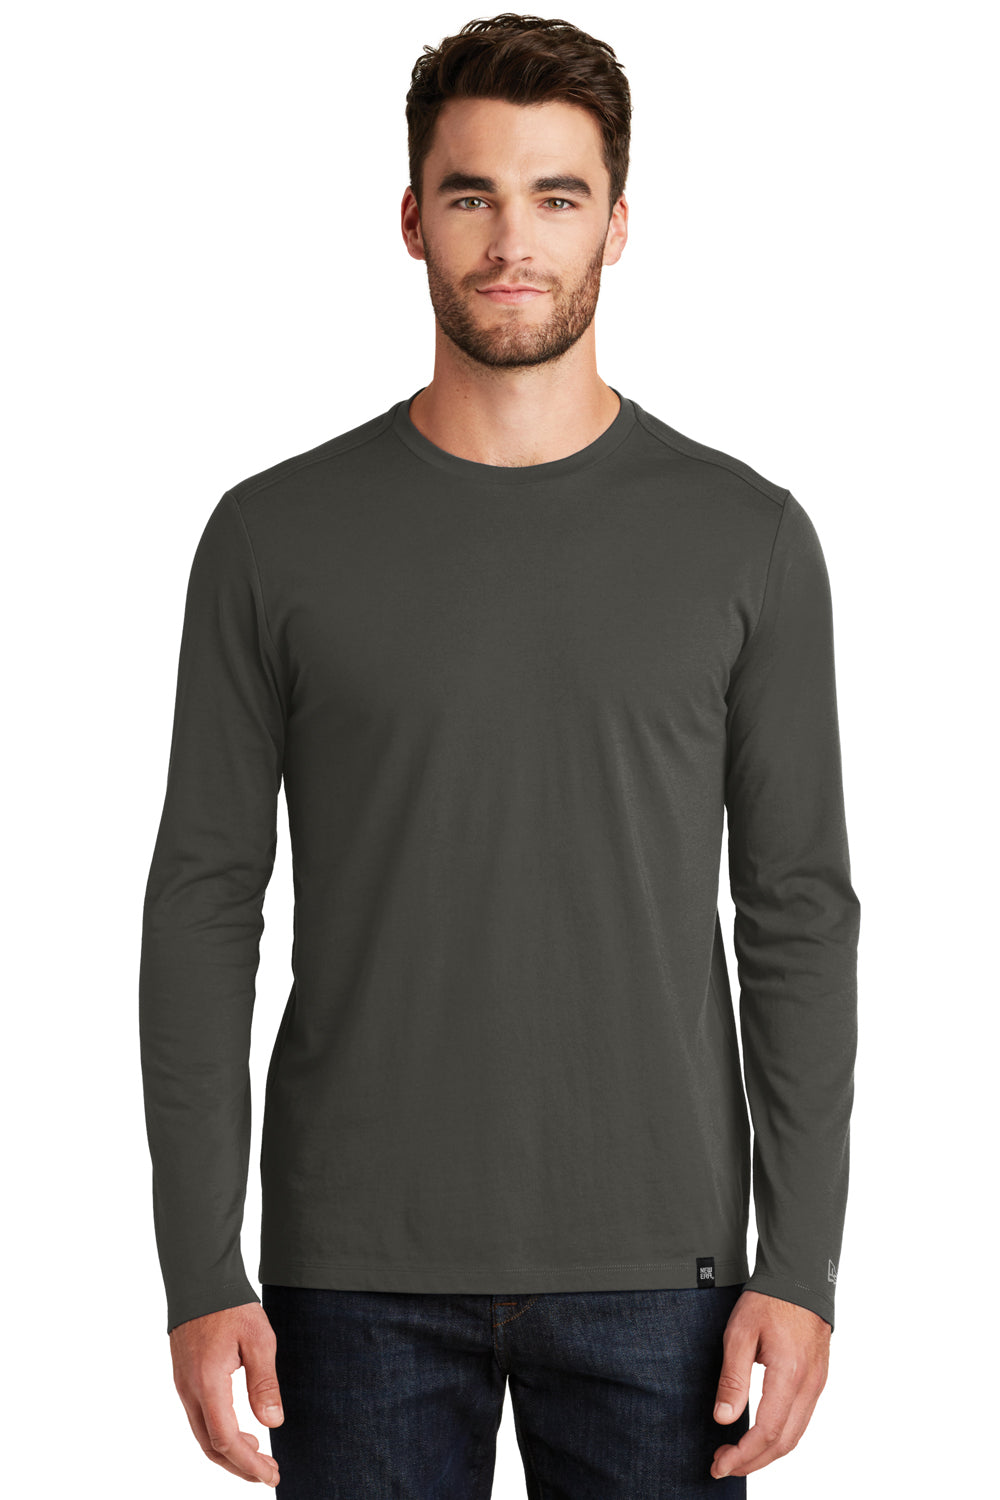 New Era NEA102 Mens Heritage Long Sleeve Crewneck T-Shirt Graphite Grey Front